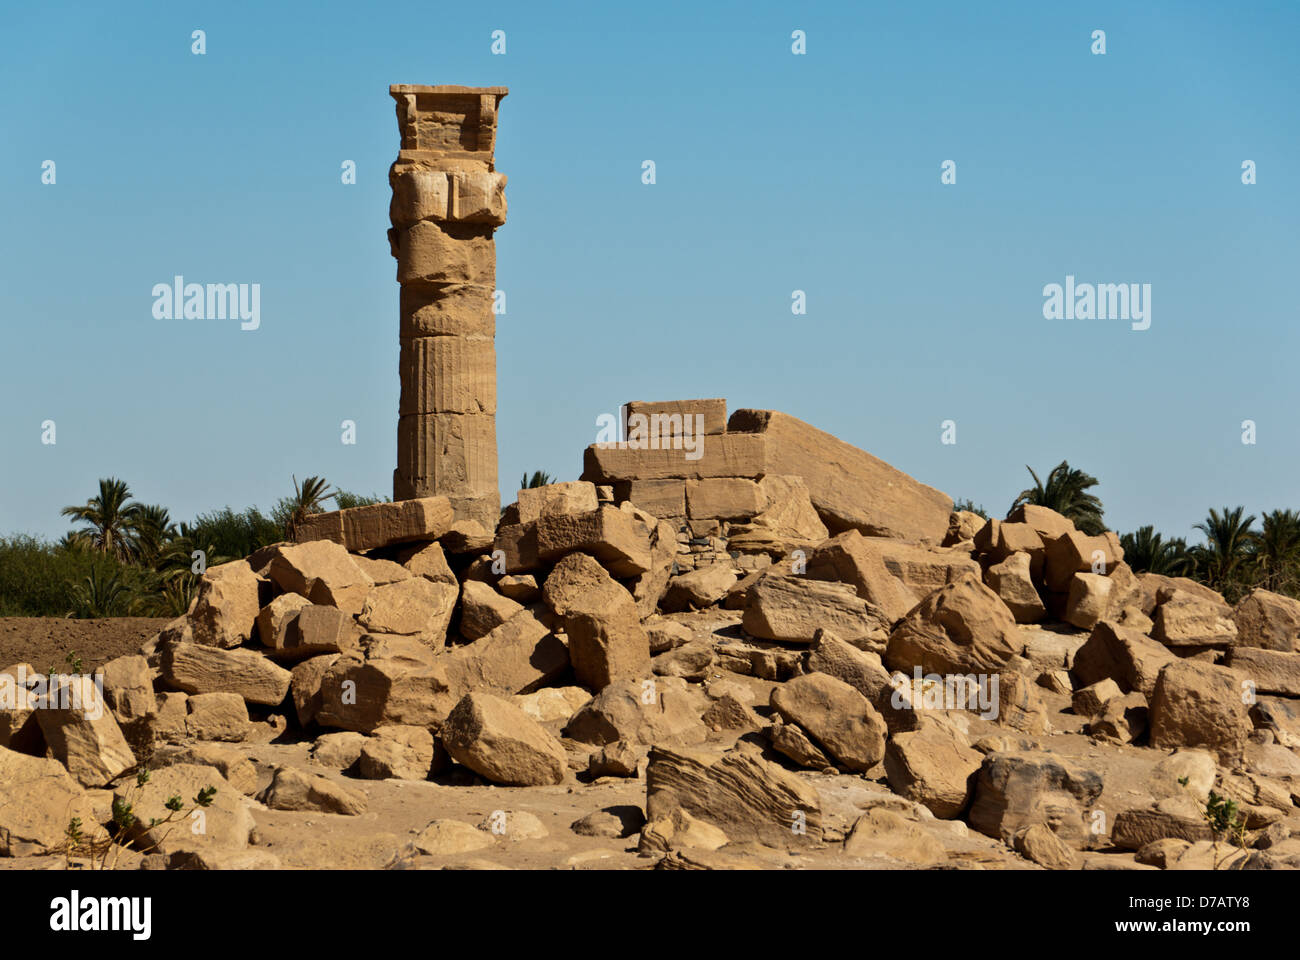 Lonely column among the ruins of Amenhotep III Sedeinga Temple dedicated to his Royal Consort Tiye, northern Sudan Stock Photo